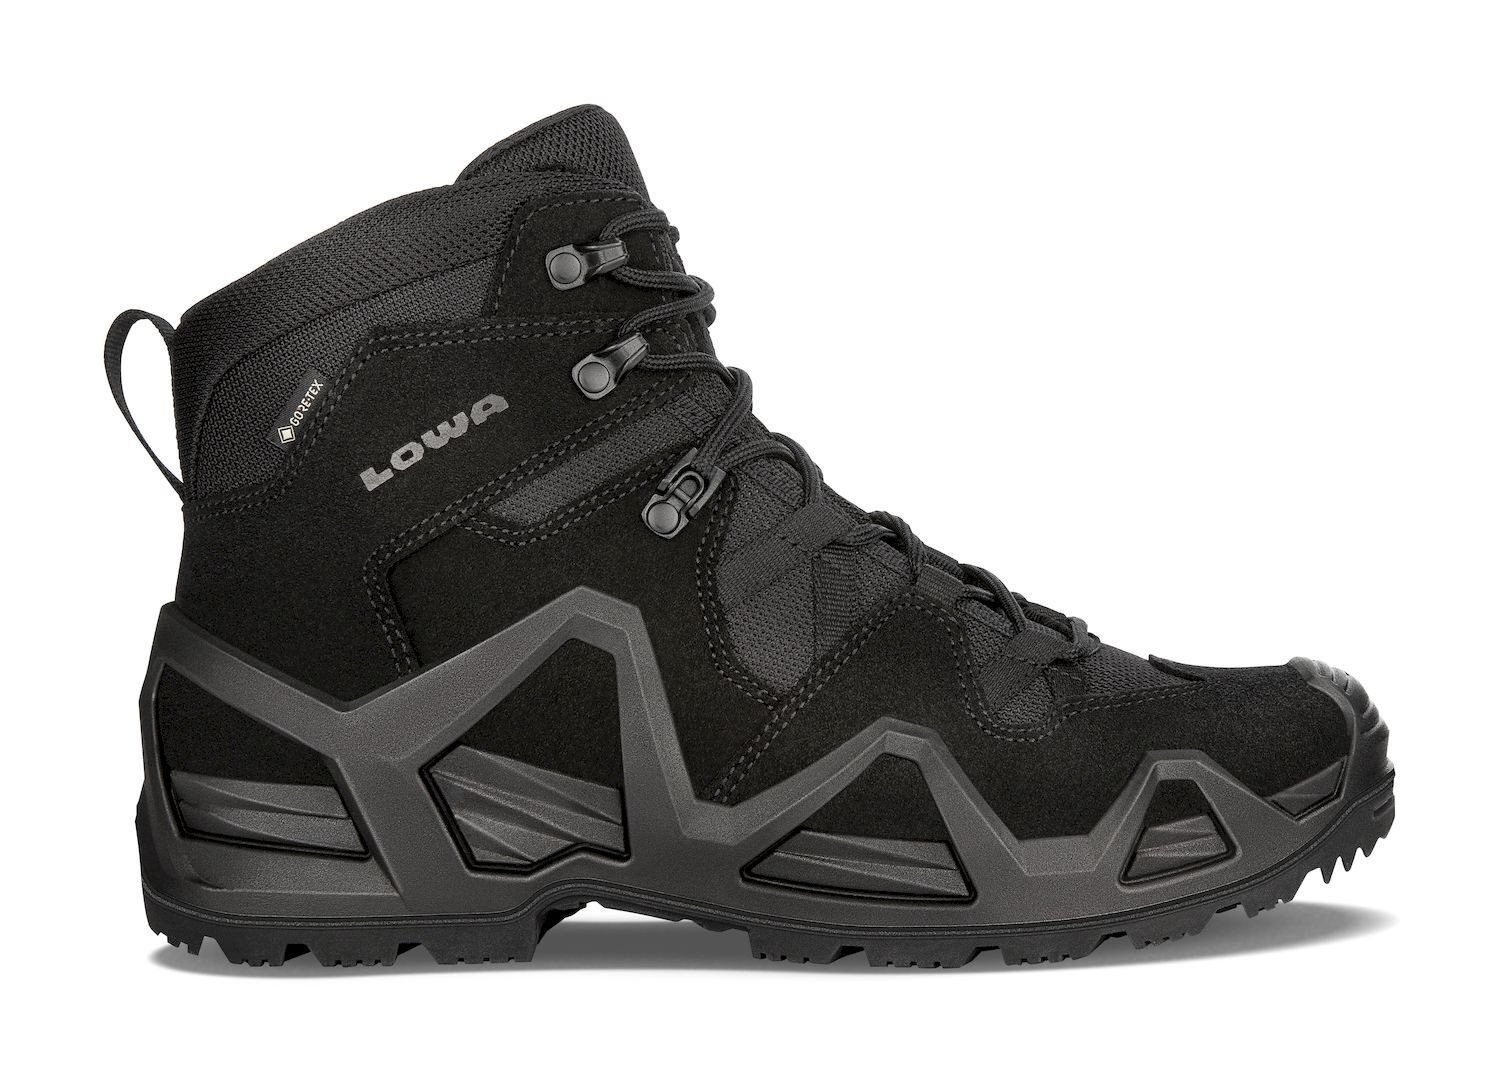 Lowa Zephyr MK2 GTX Mid - Hiking boots